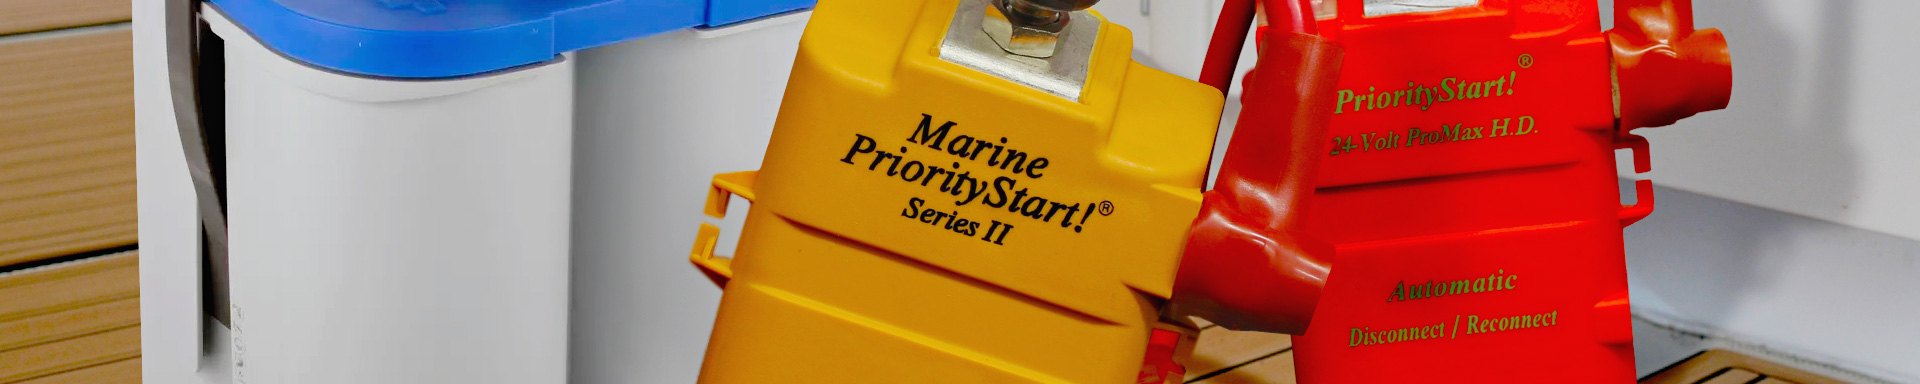 PriorityStart Marine Circuit Protection